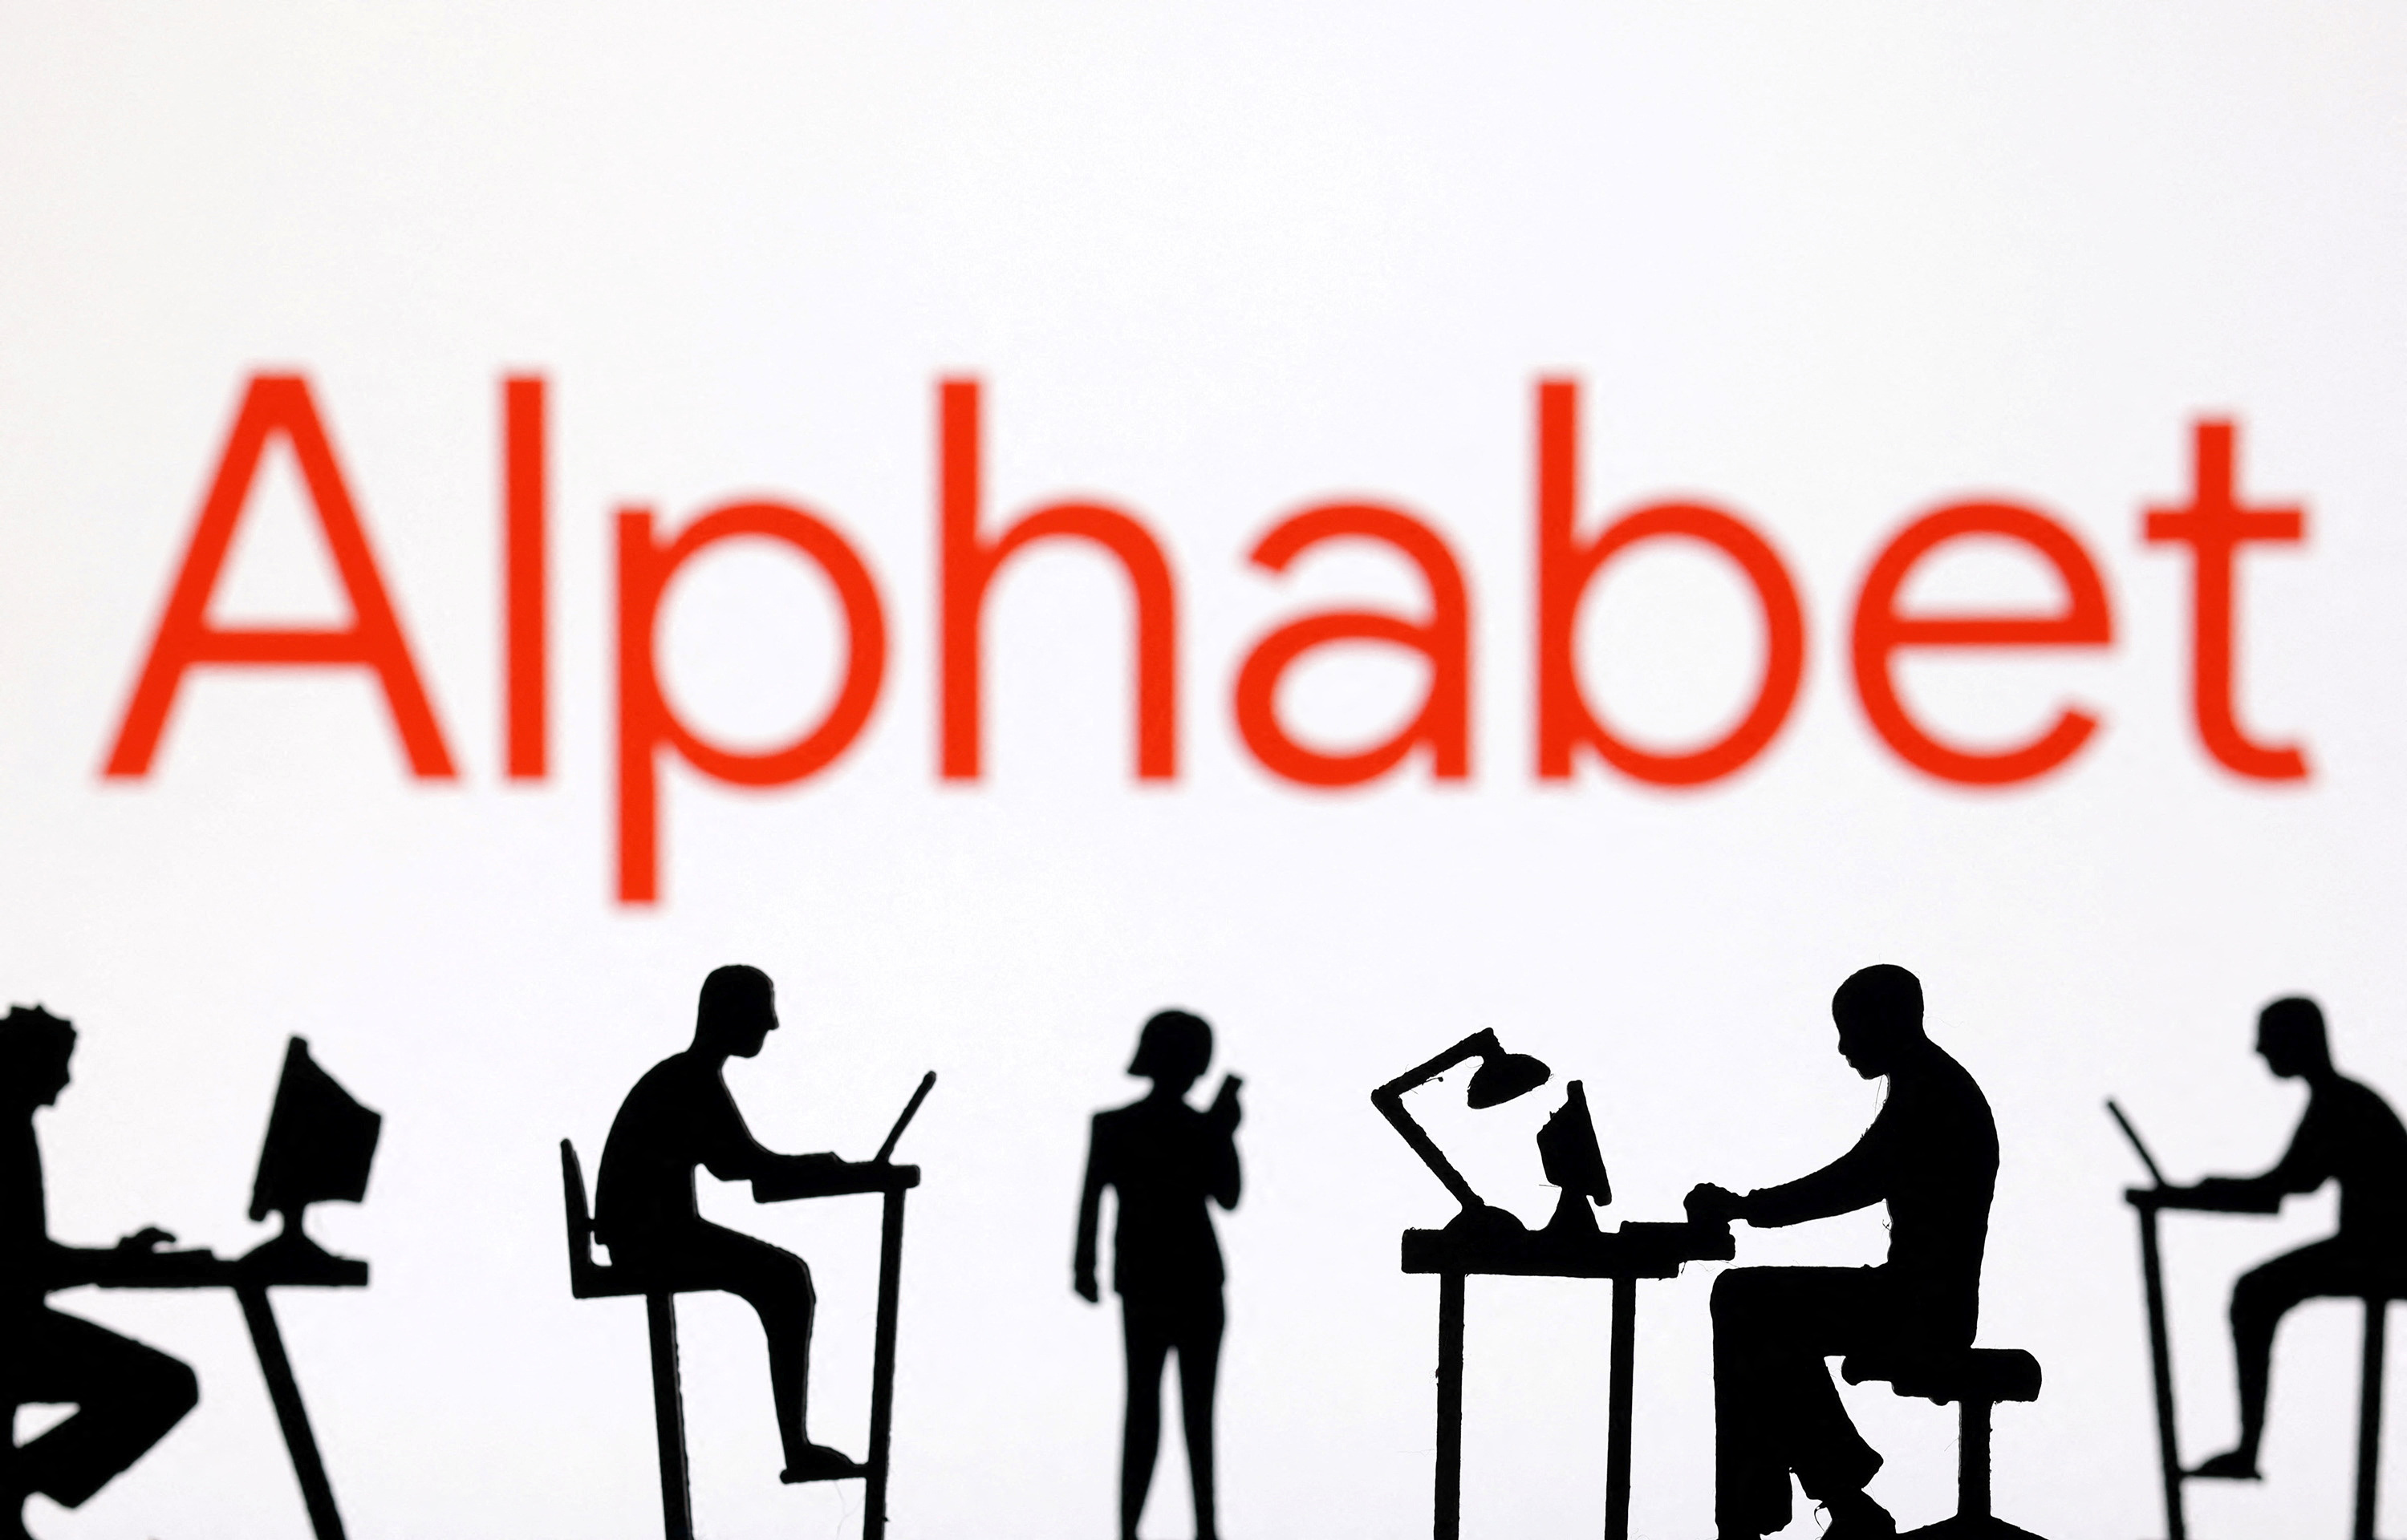 Illustration shows Alphabet logo